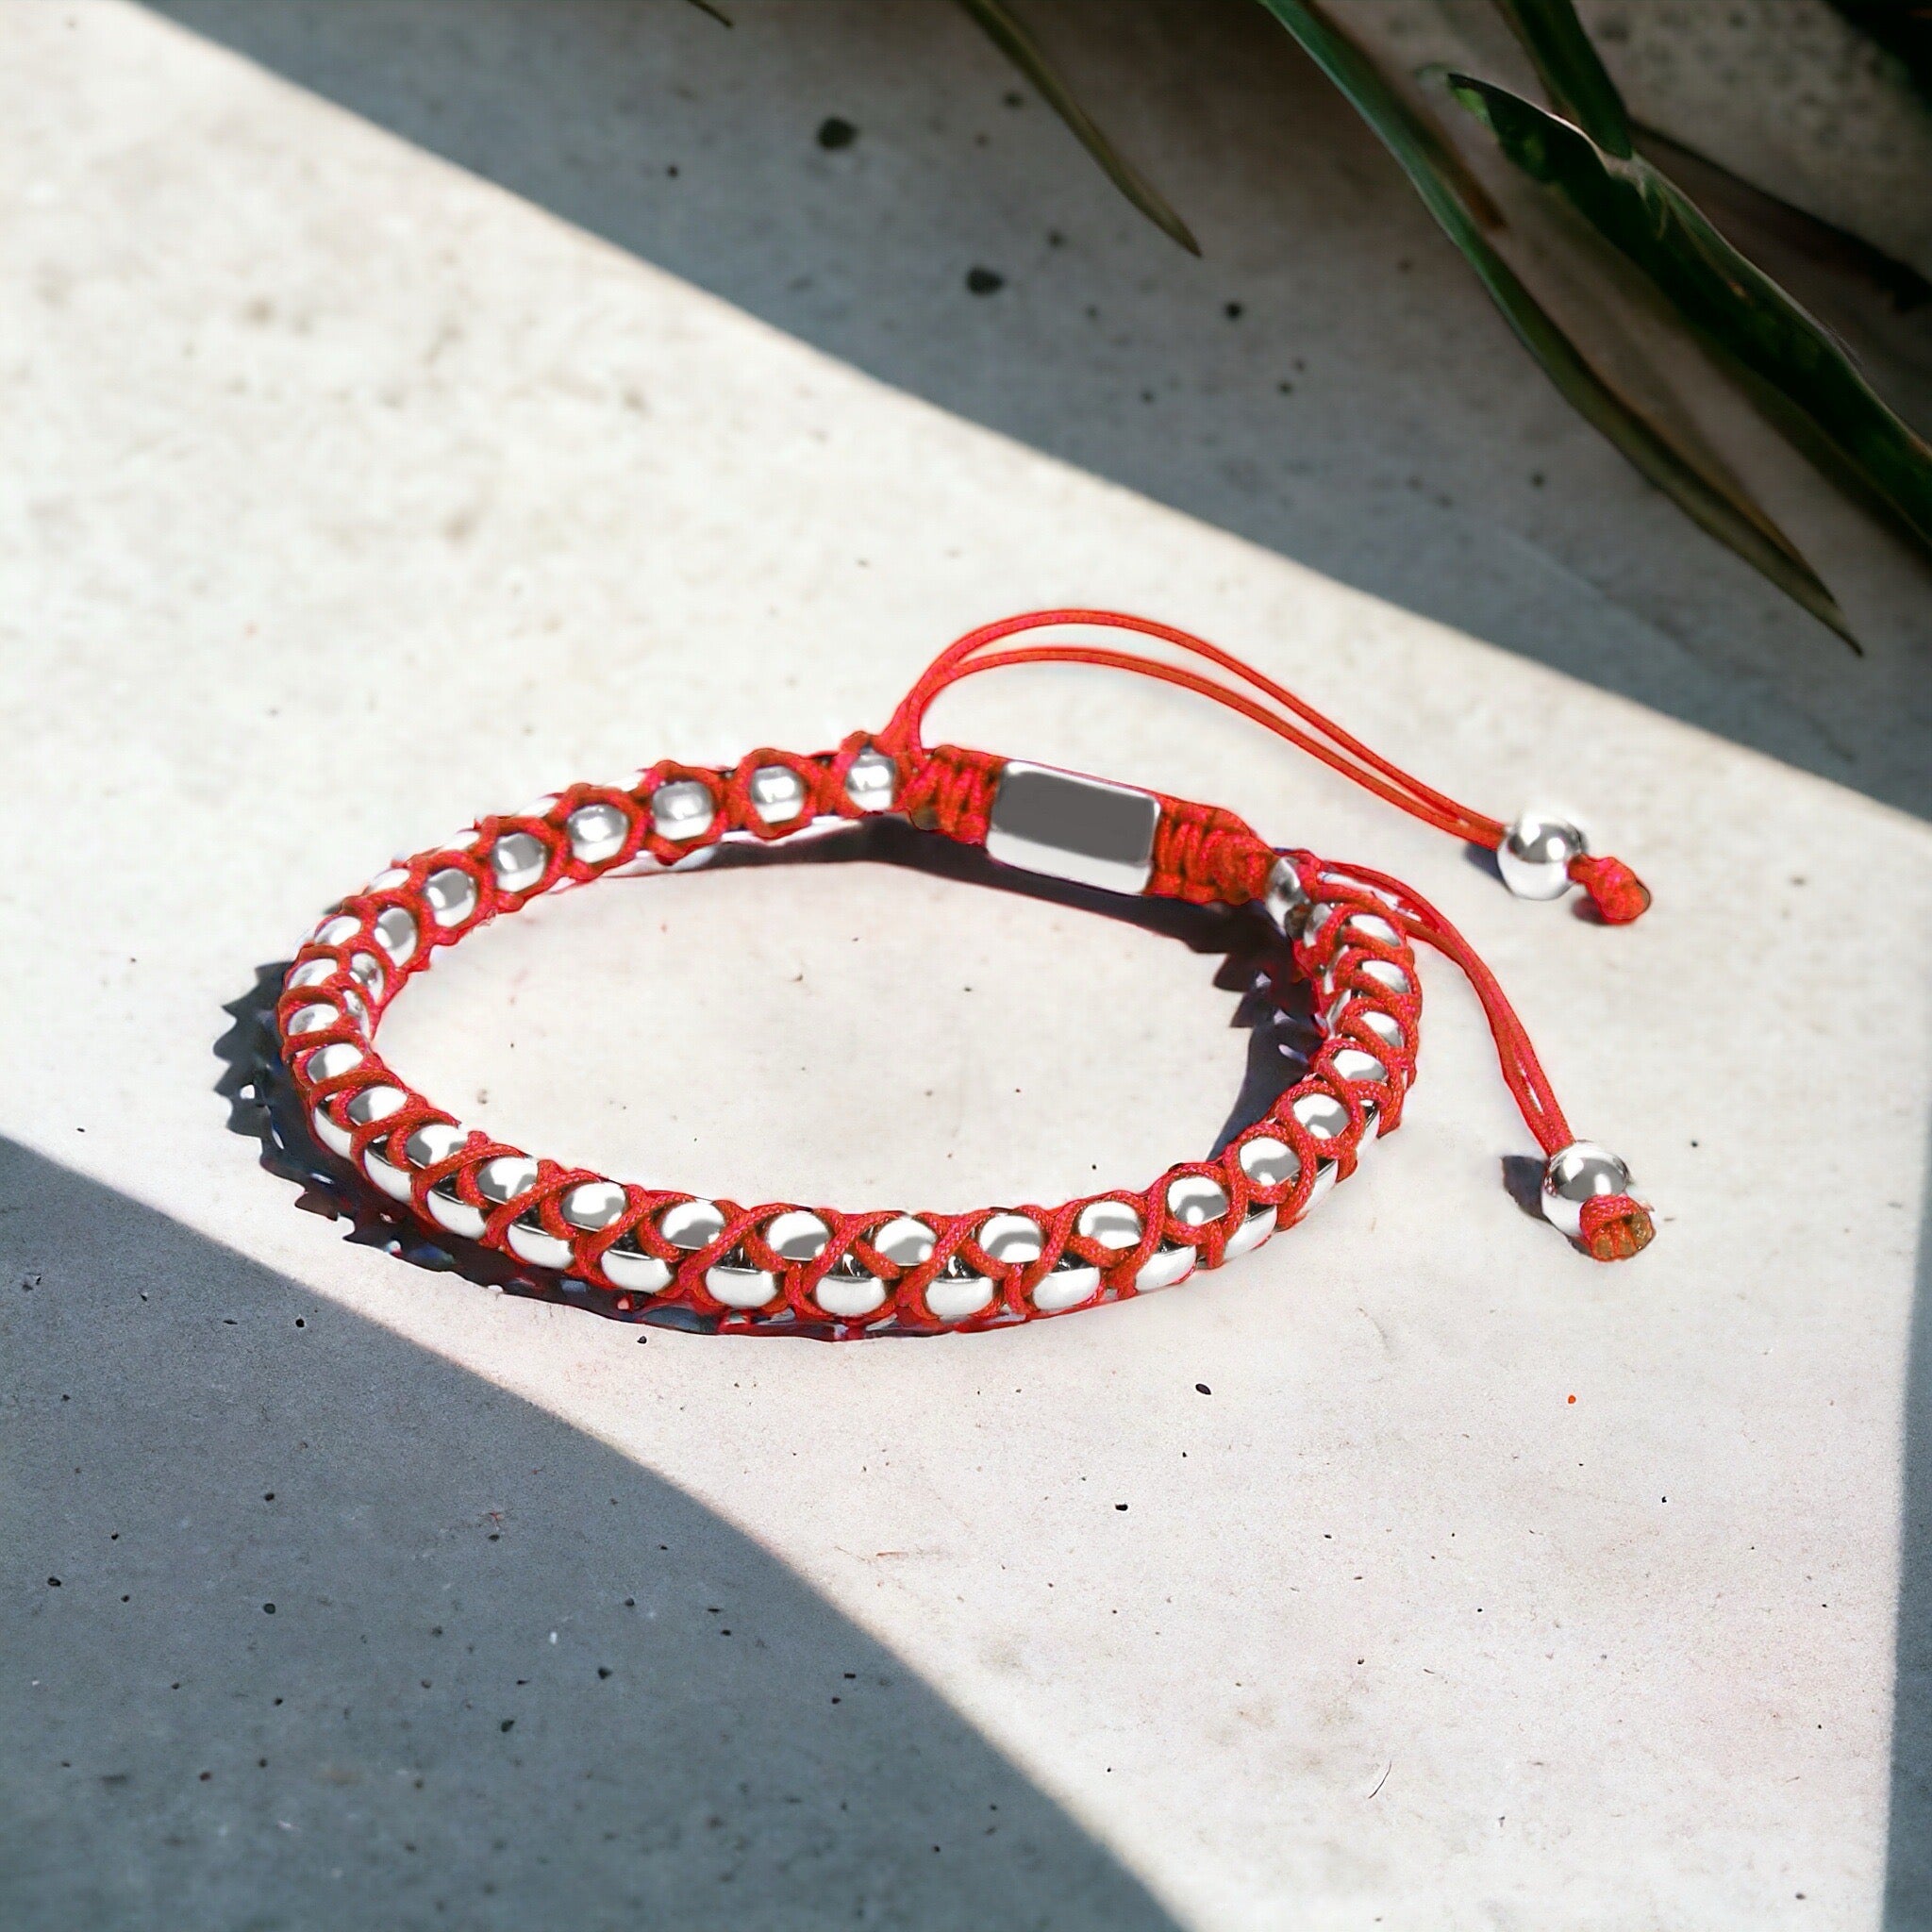 Silver Chain & Red String Braided Bracelet - My Harmony Tree